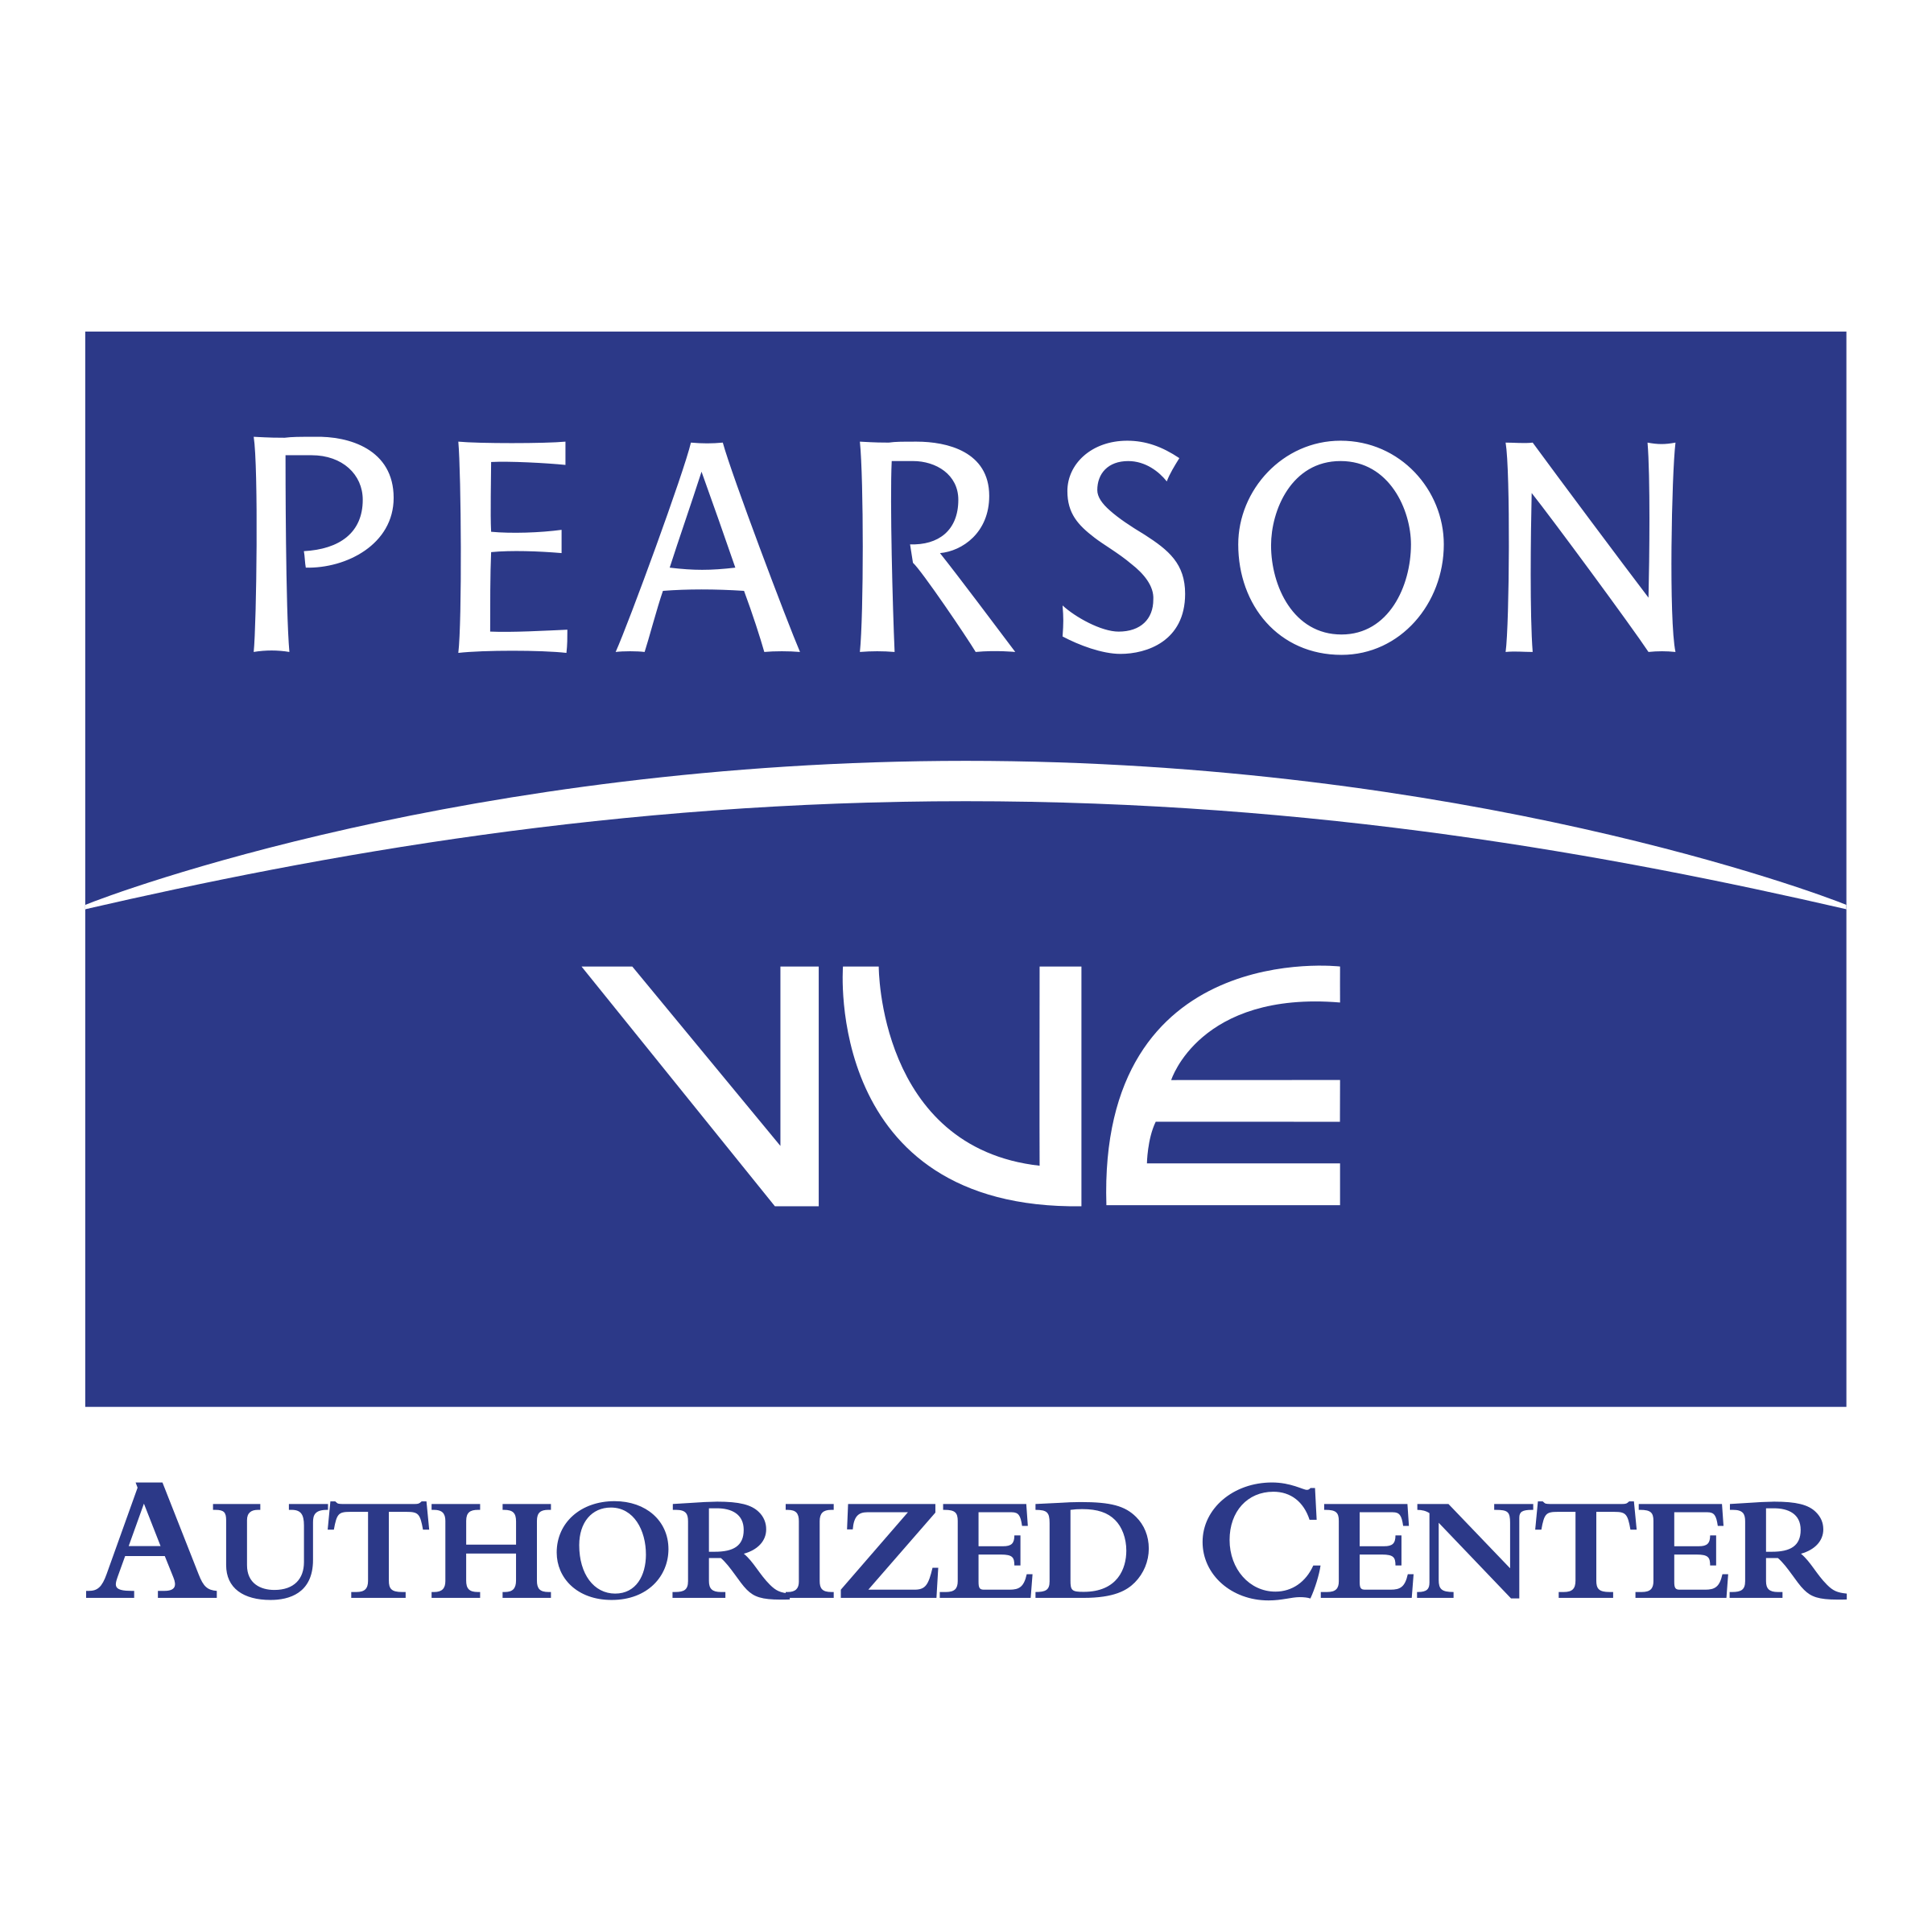 Pearson Logo - Pearson VUE Logo PNG Transparent & SVG Vector